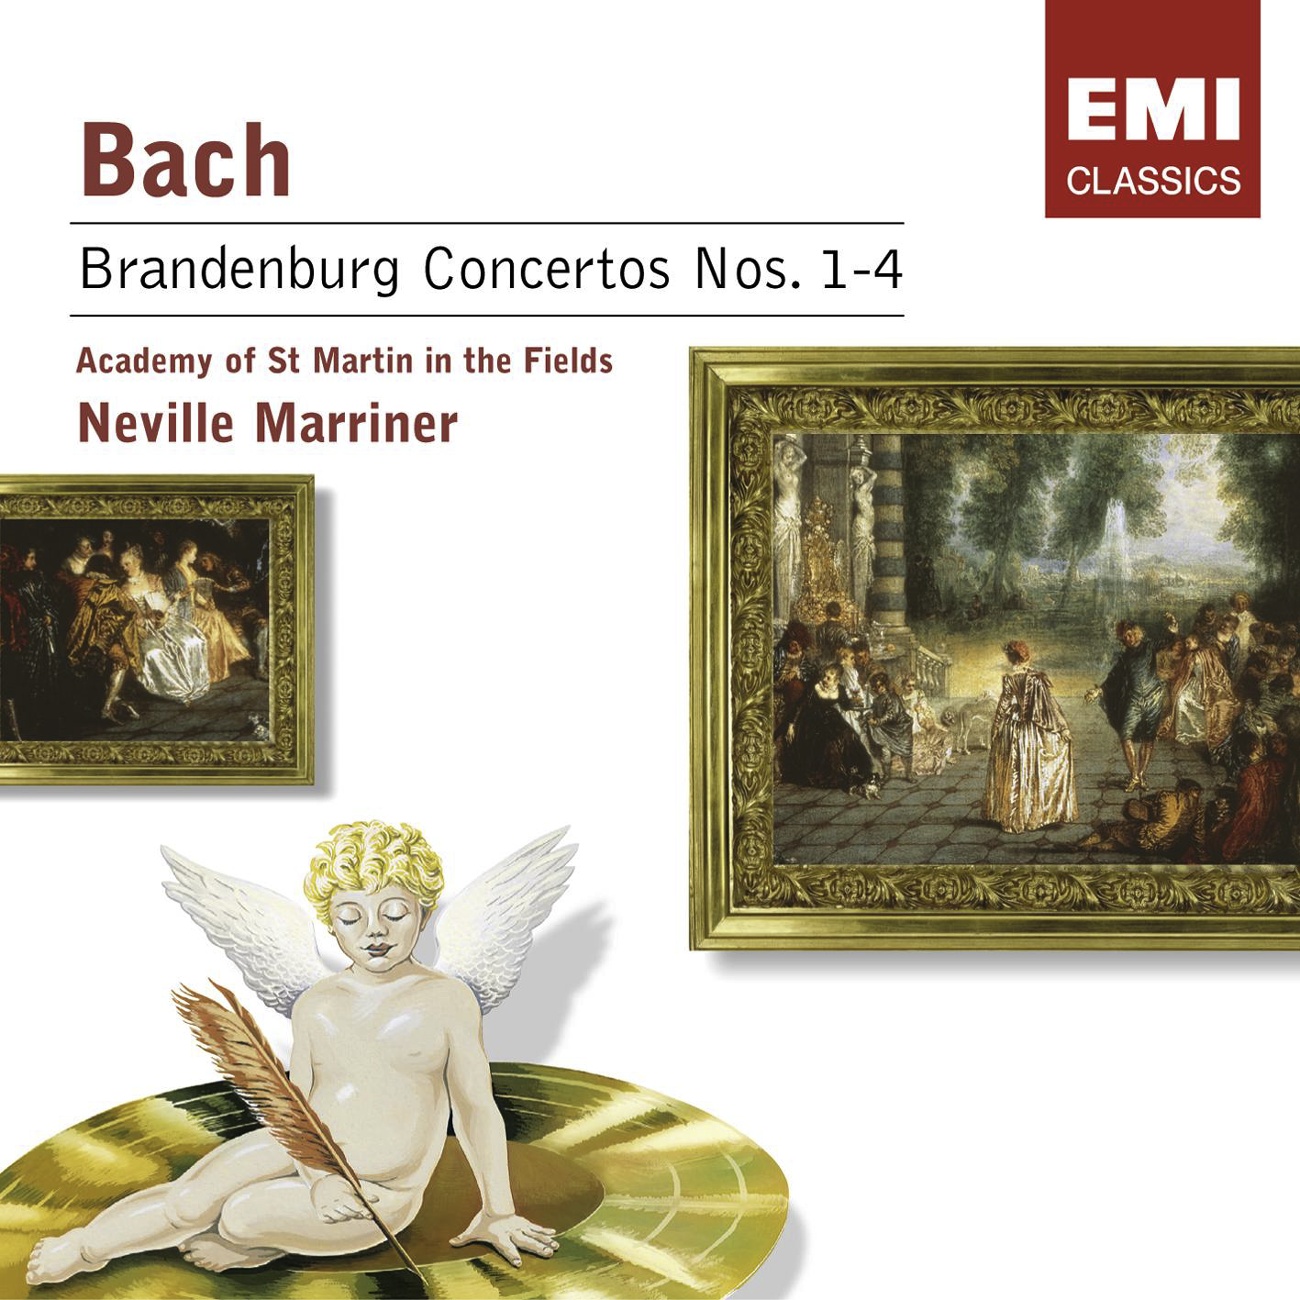 Brandenburg Concerto No. 3 in G, BWV 1048: II. Adagio  (by George Malcolm)